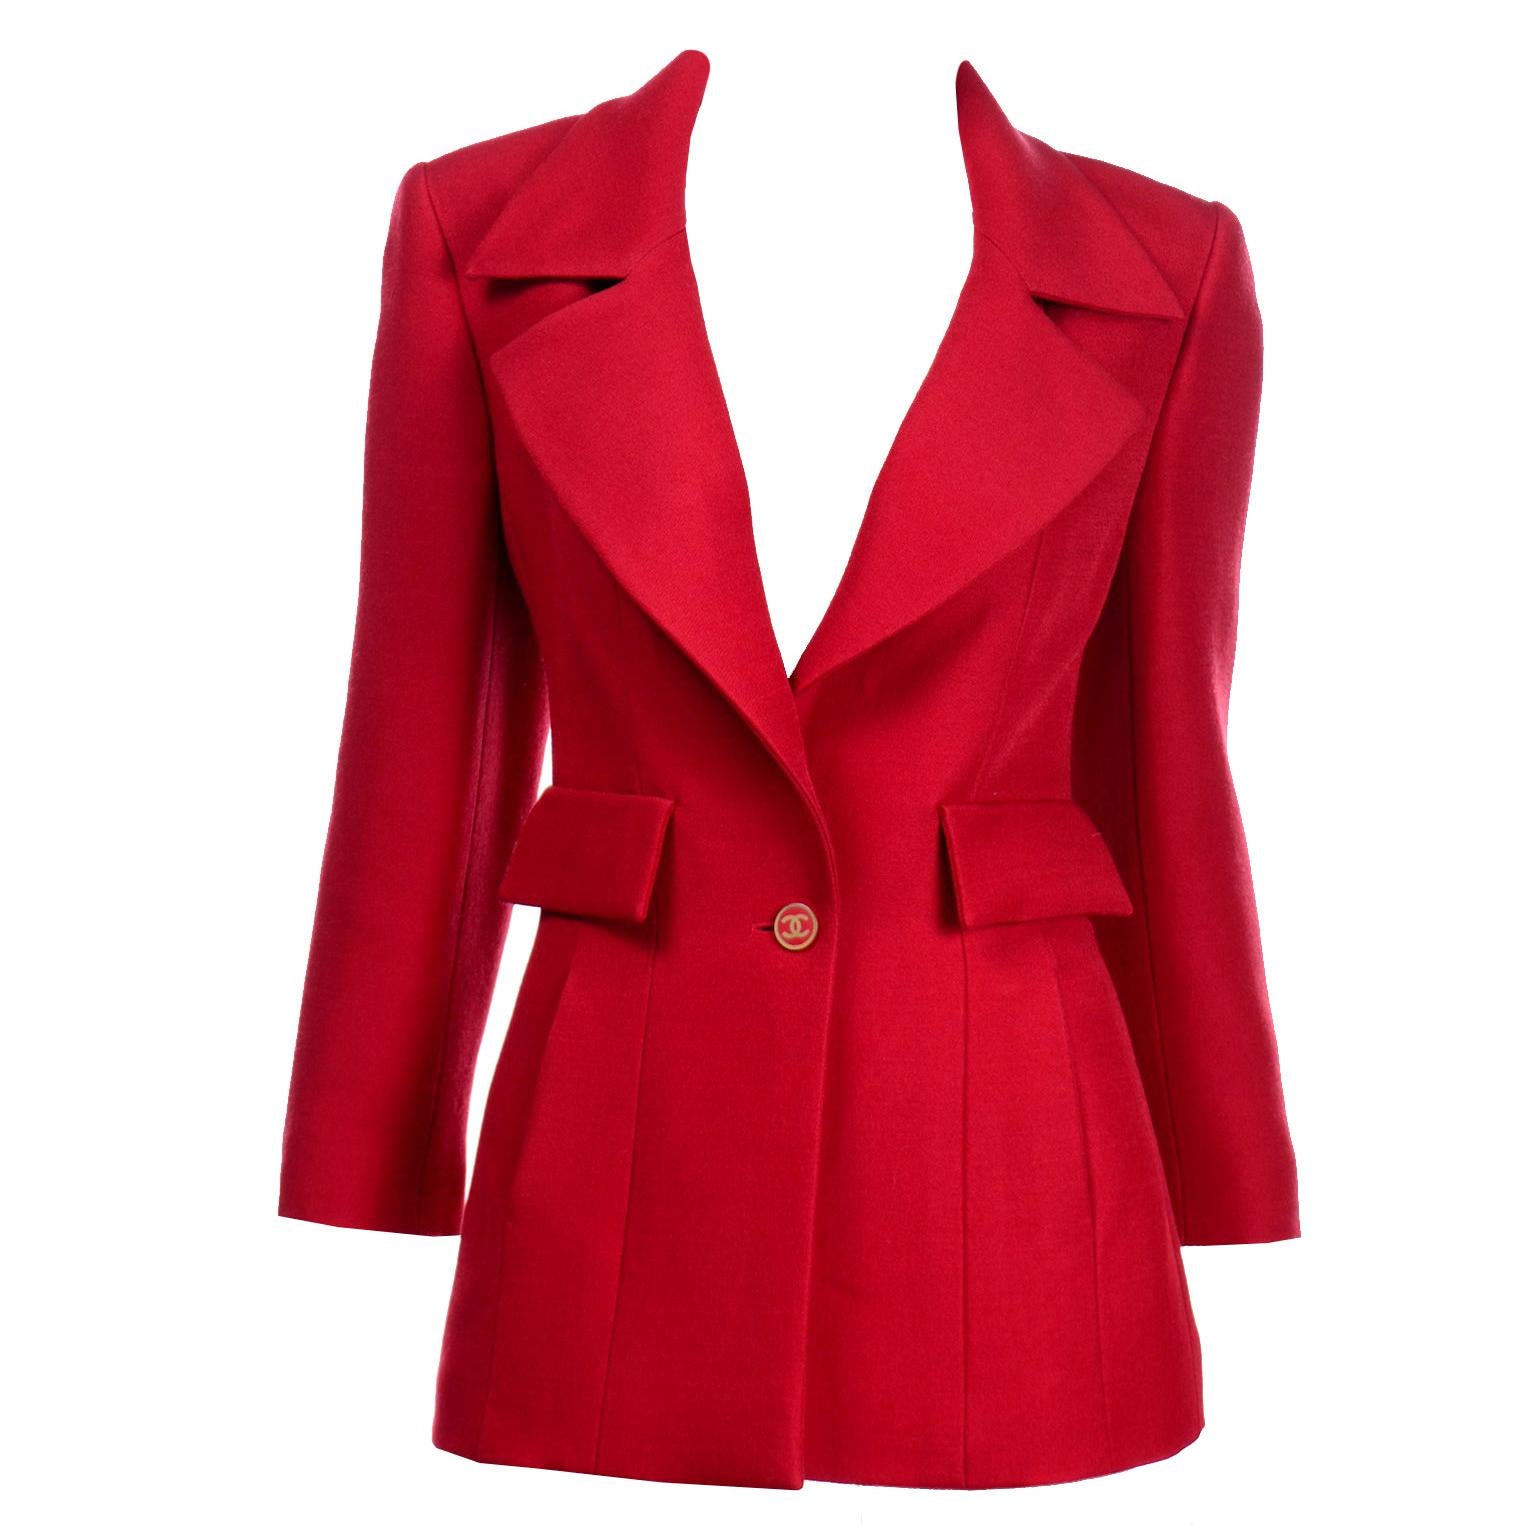 2001 Red Wool Blend Chanel Blazer Jacket W Notch Collar and CC Button Closure